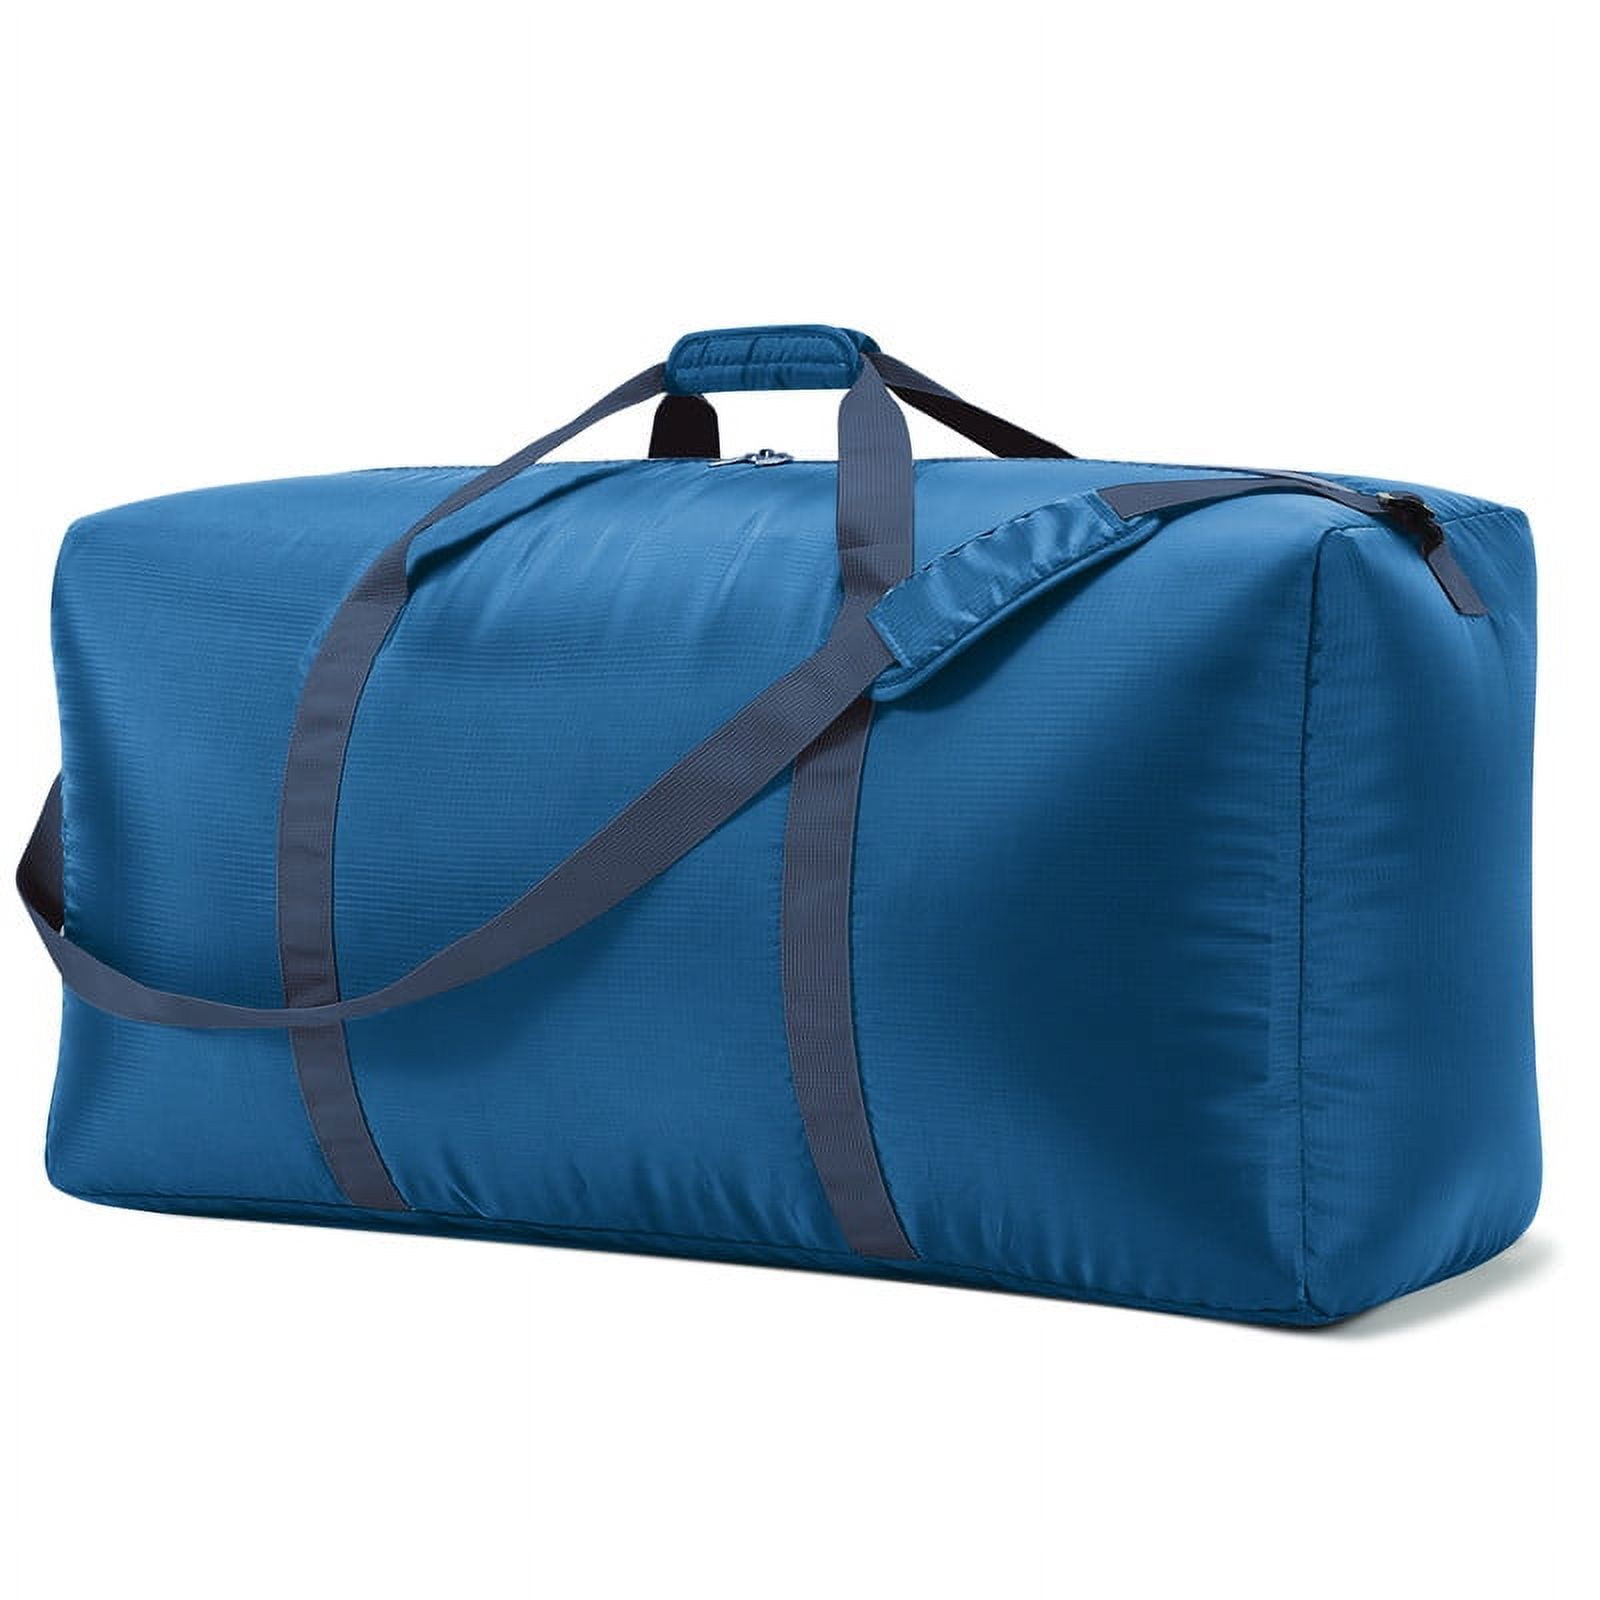 iFARADAY Extra Large Duffel Bag 32.5 inch Lightweight Luggage for ...